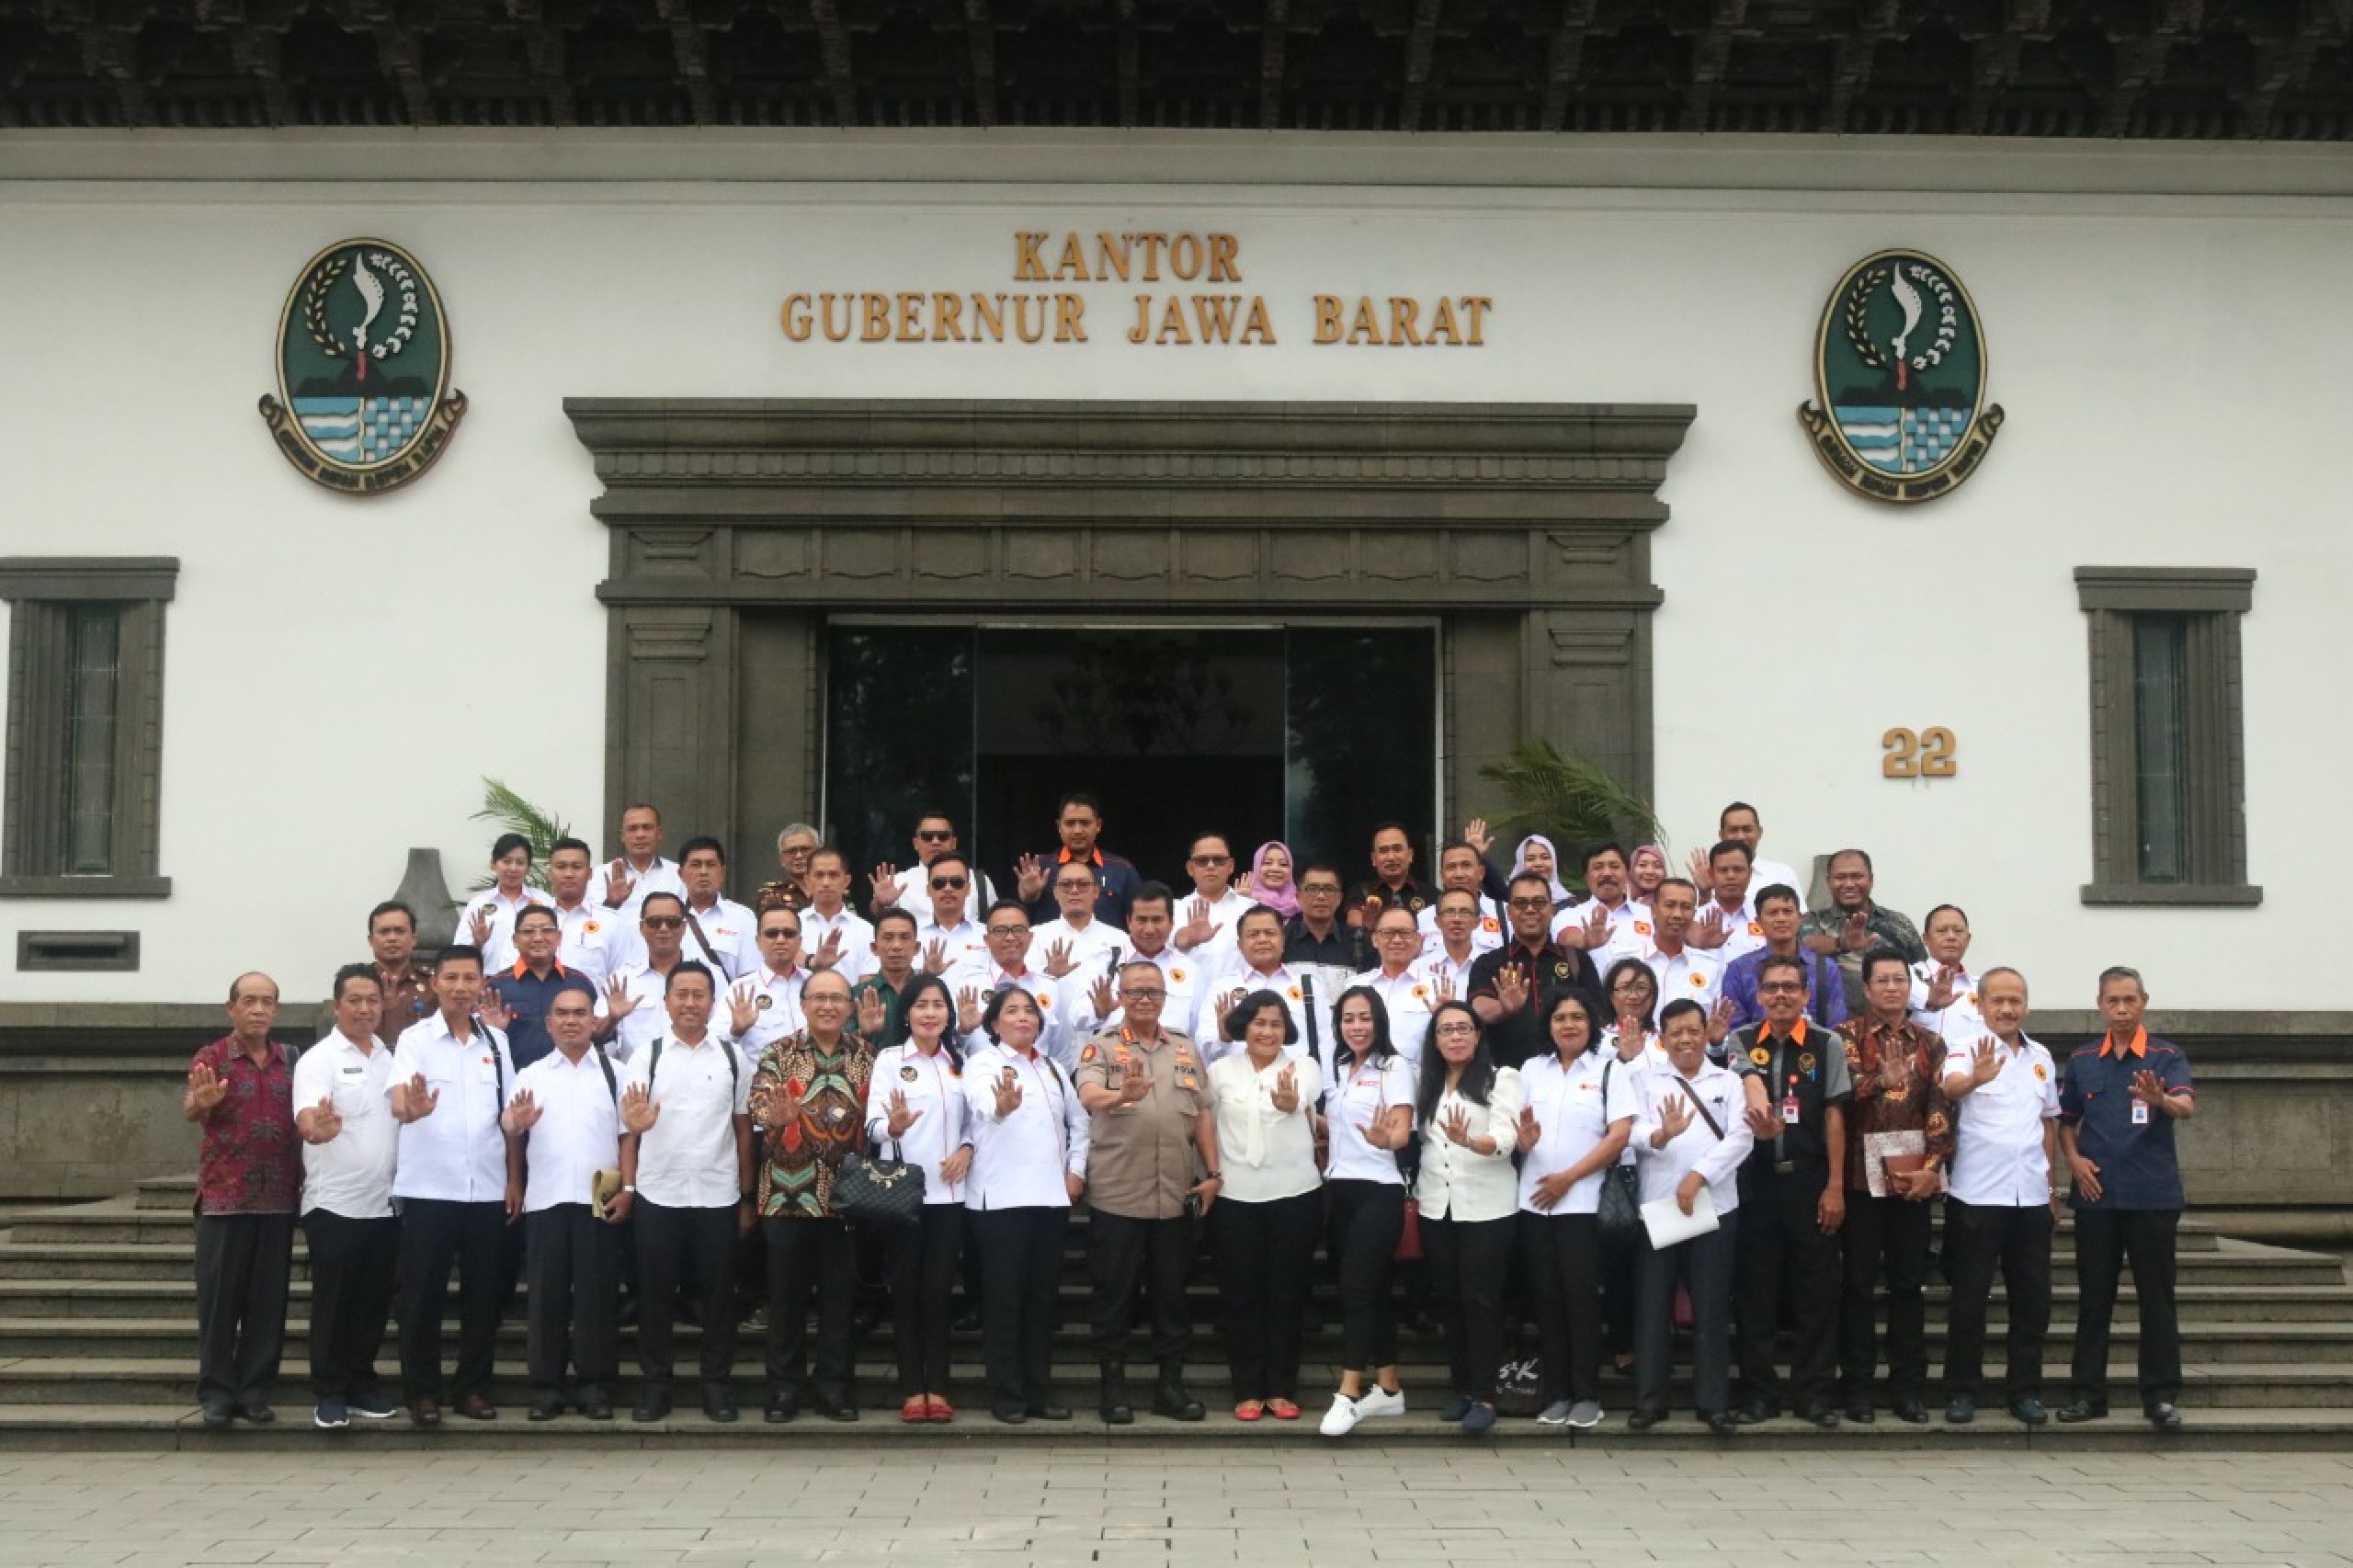 saberpungli jabar - Satgas Saberpungli Jabar Terima Kunjungan Kerja Dari UPP Prov Bali